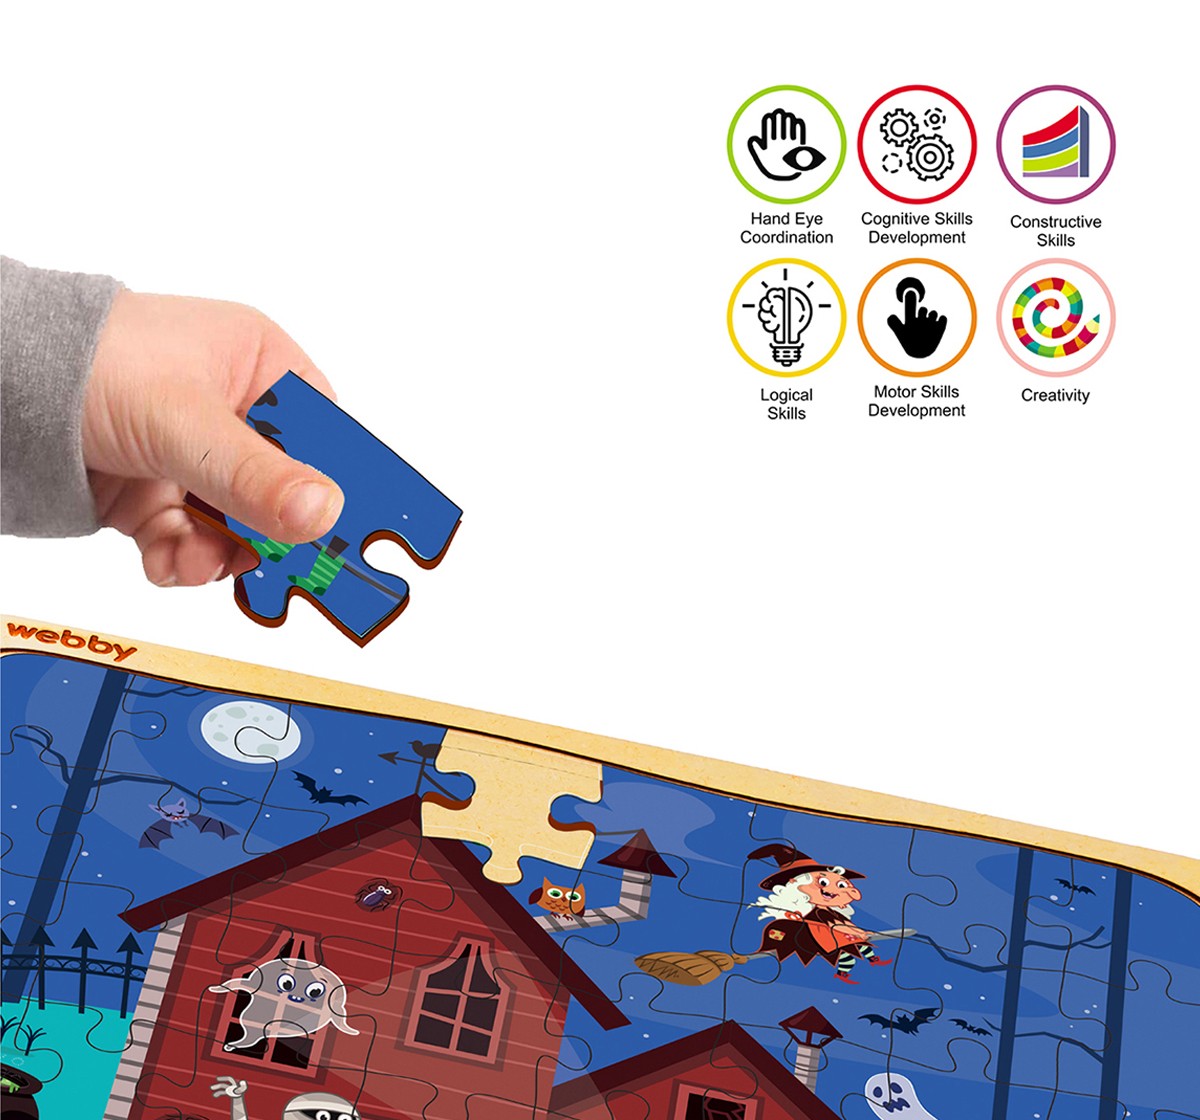 Webby Haunted House Wooden Puzzle 40 Pcs,  3Y+ (Multicolour)